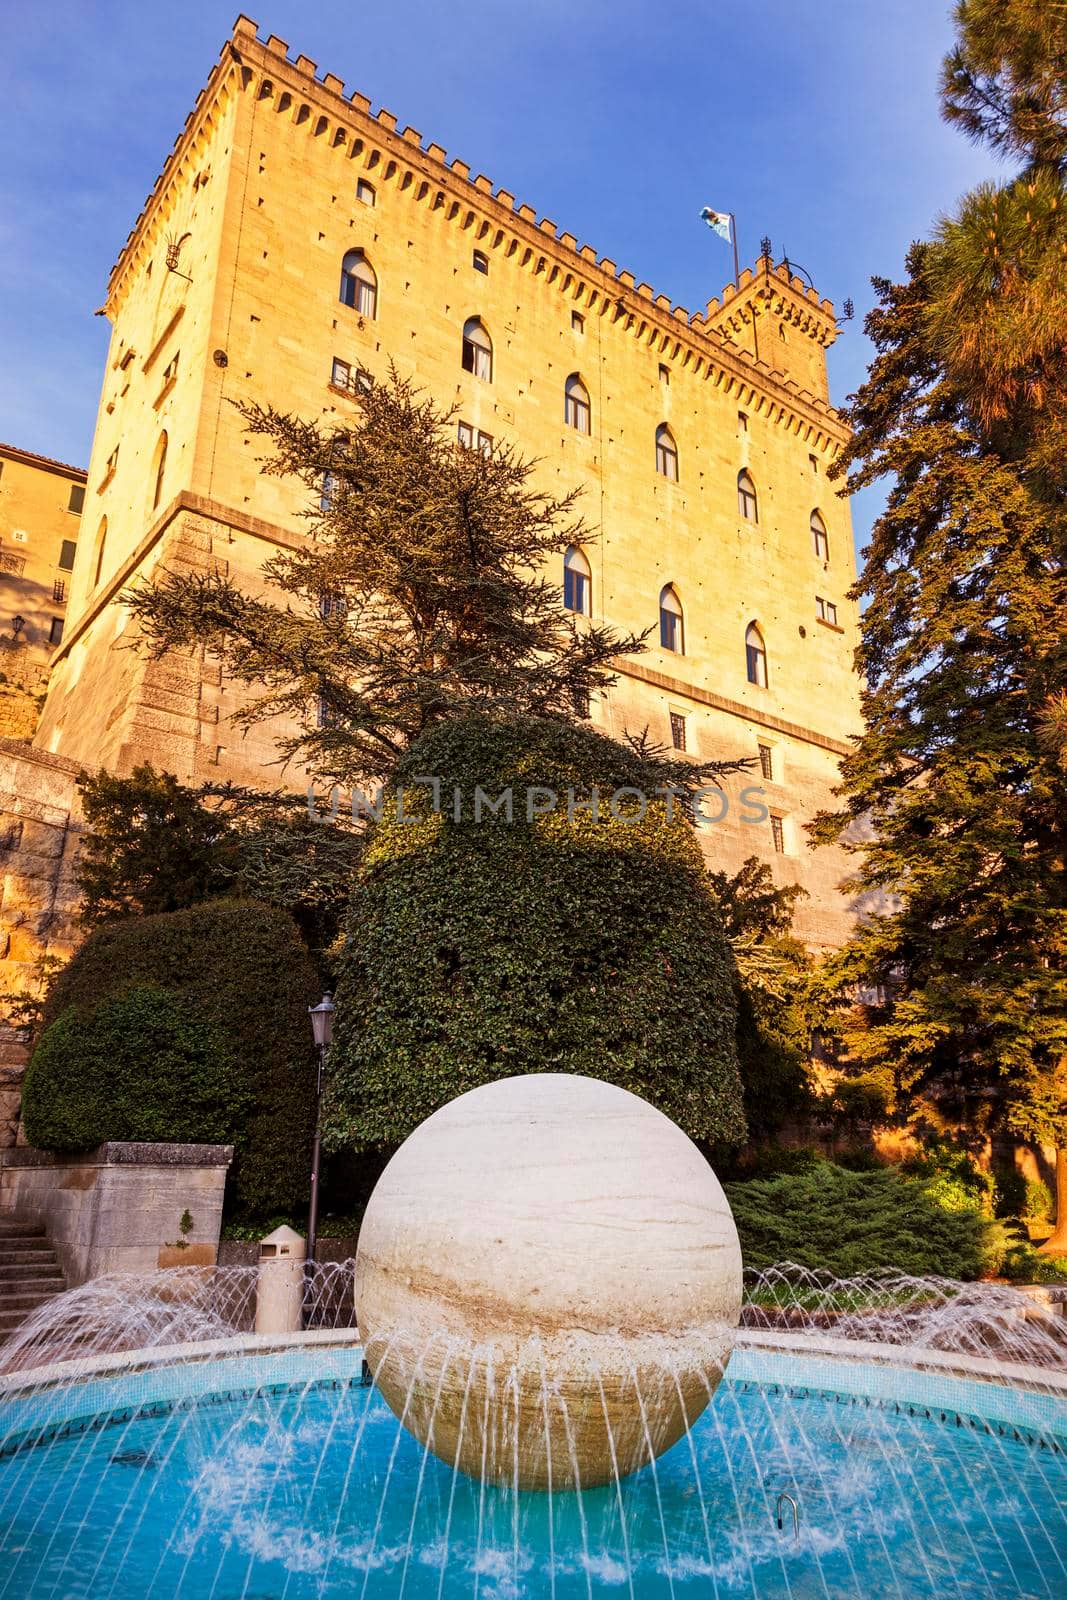 City of San Marino town hall - Palazzo Pubblico. San Marino.